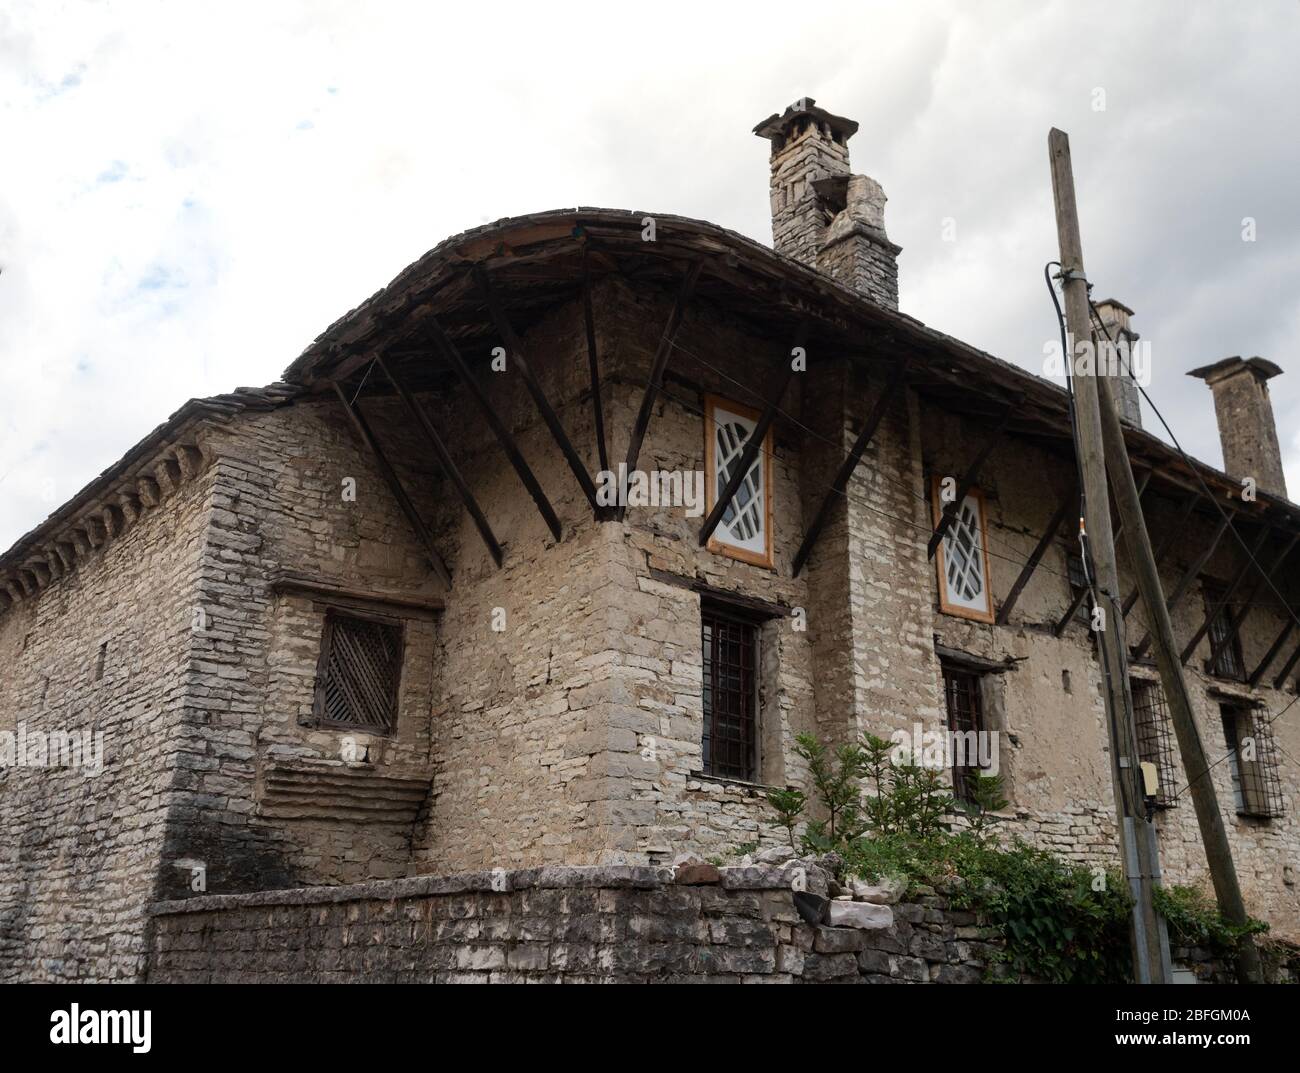 Skendulaj or Skenduli House in Gjirokaster, Albania Stock Photo